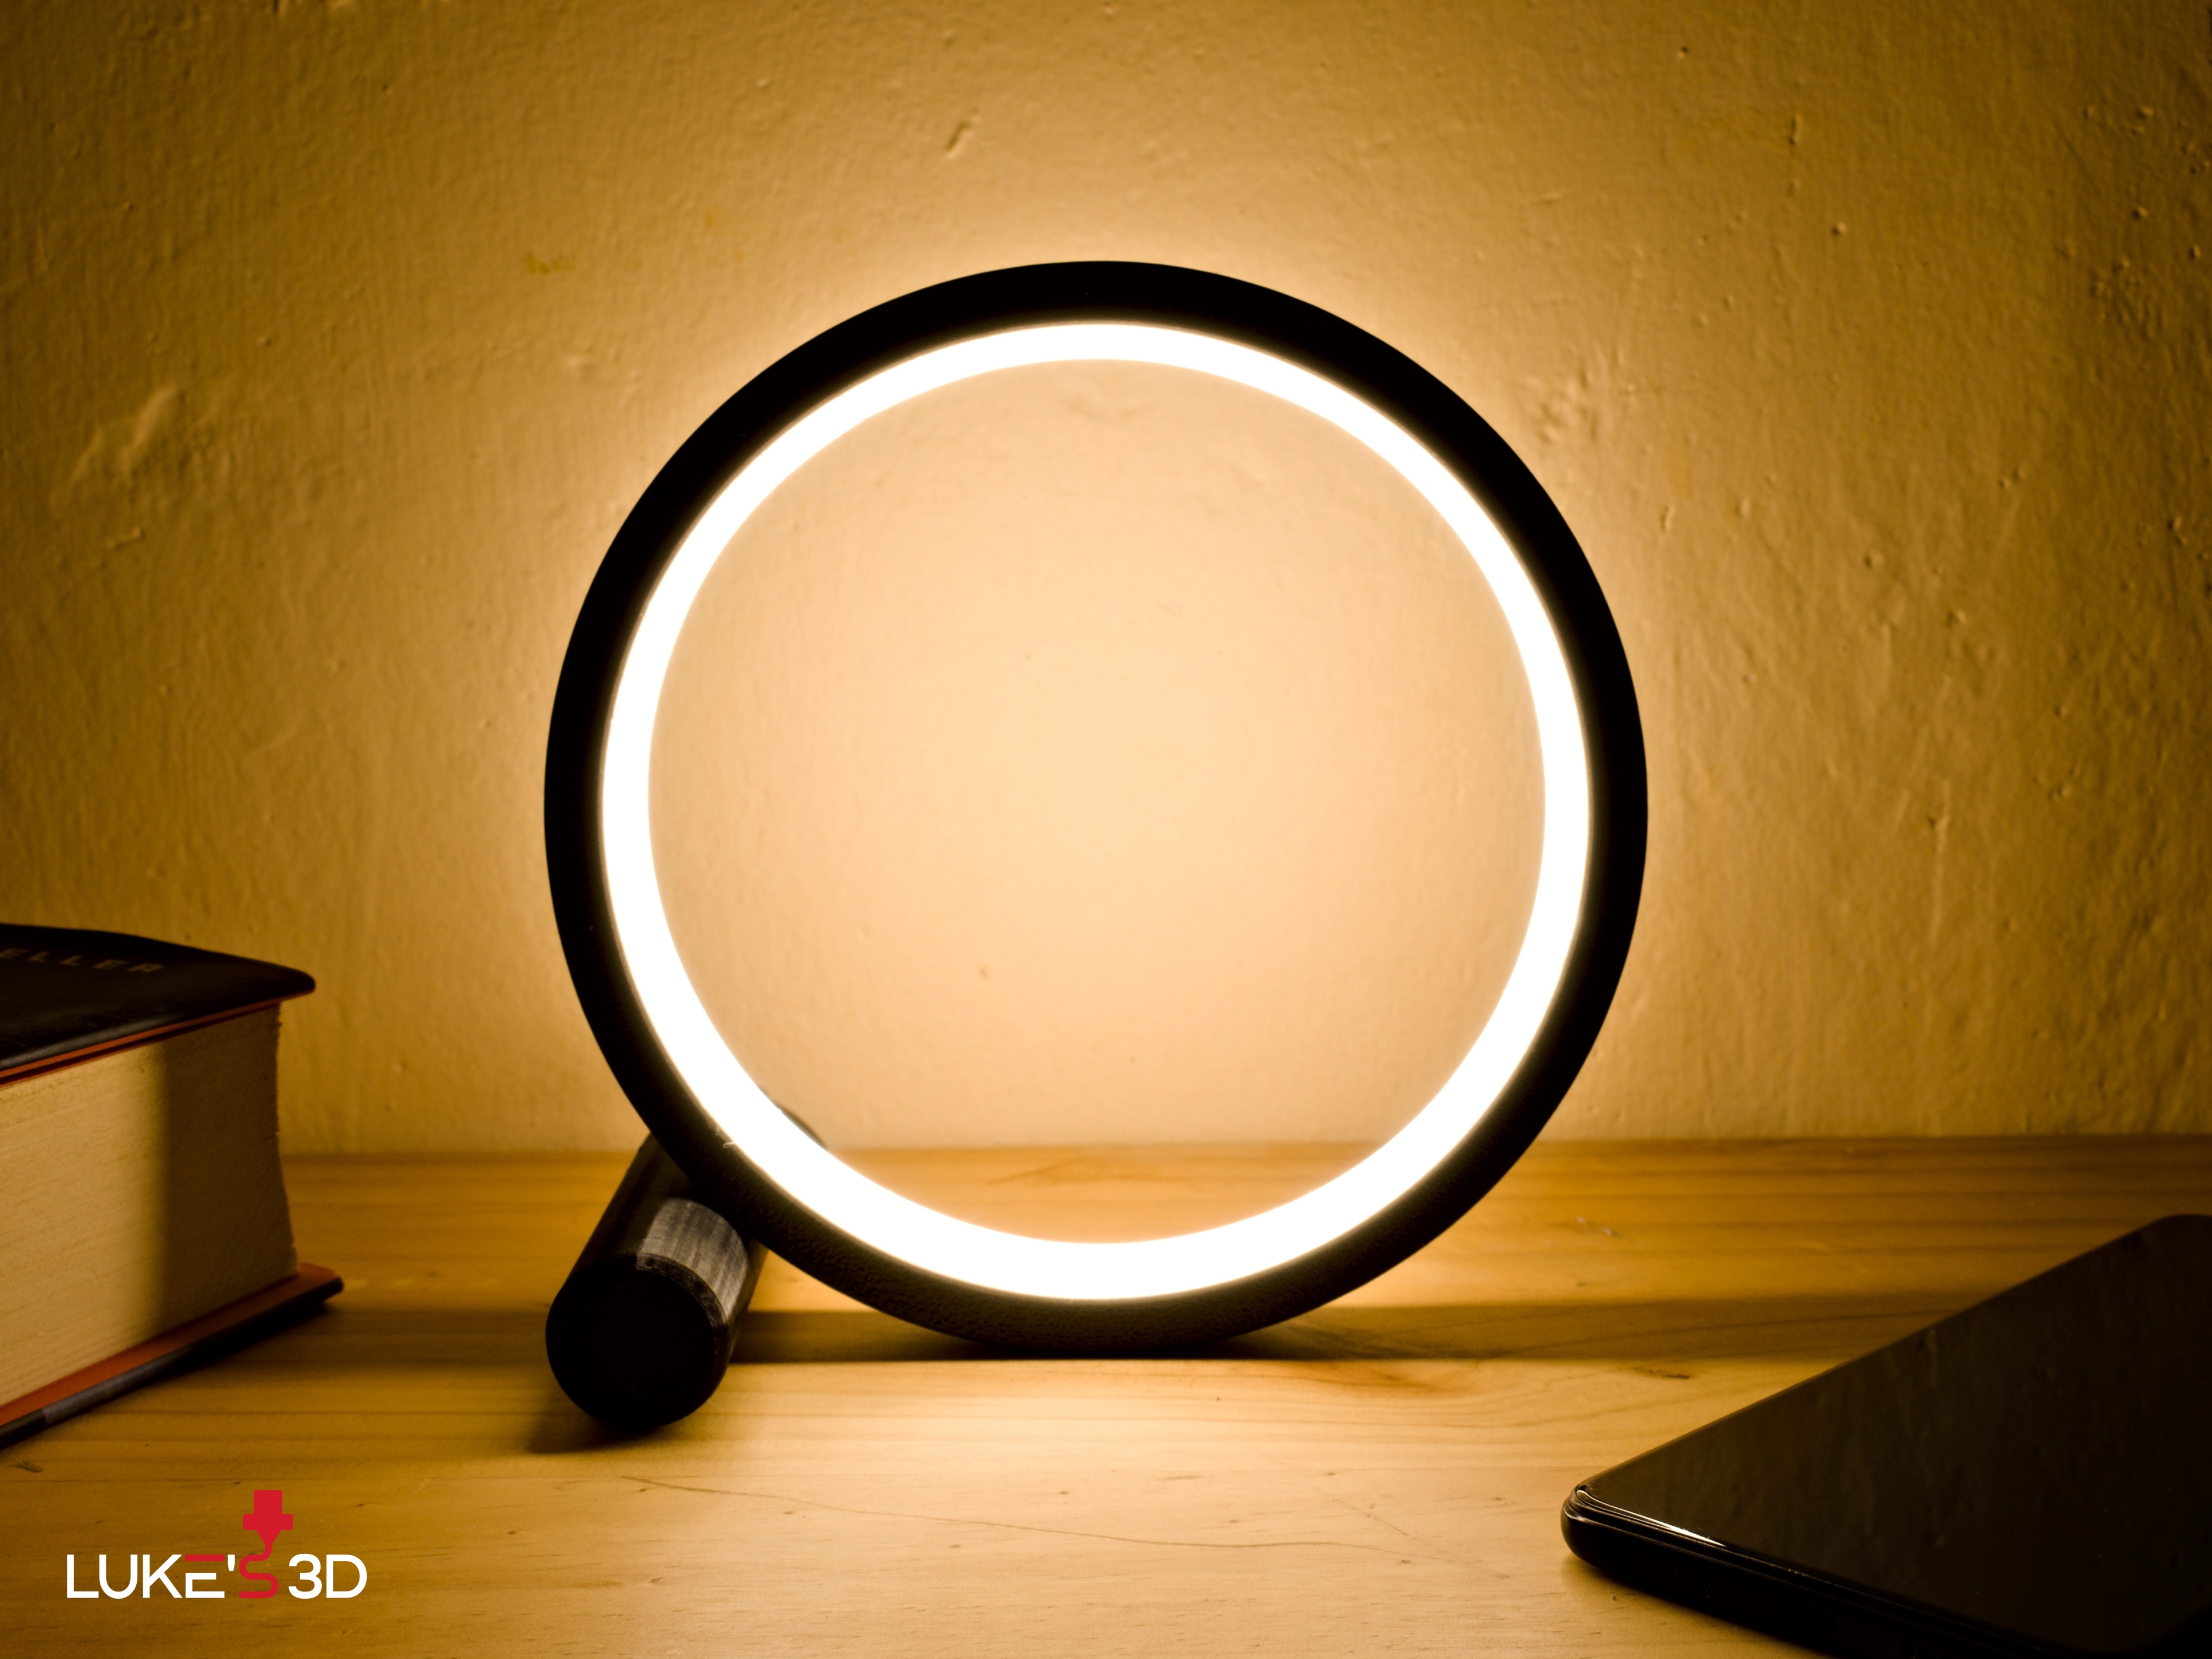 LED Ring Lamp by Luke's 3D, Download free STL model